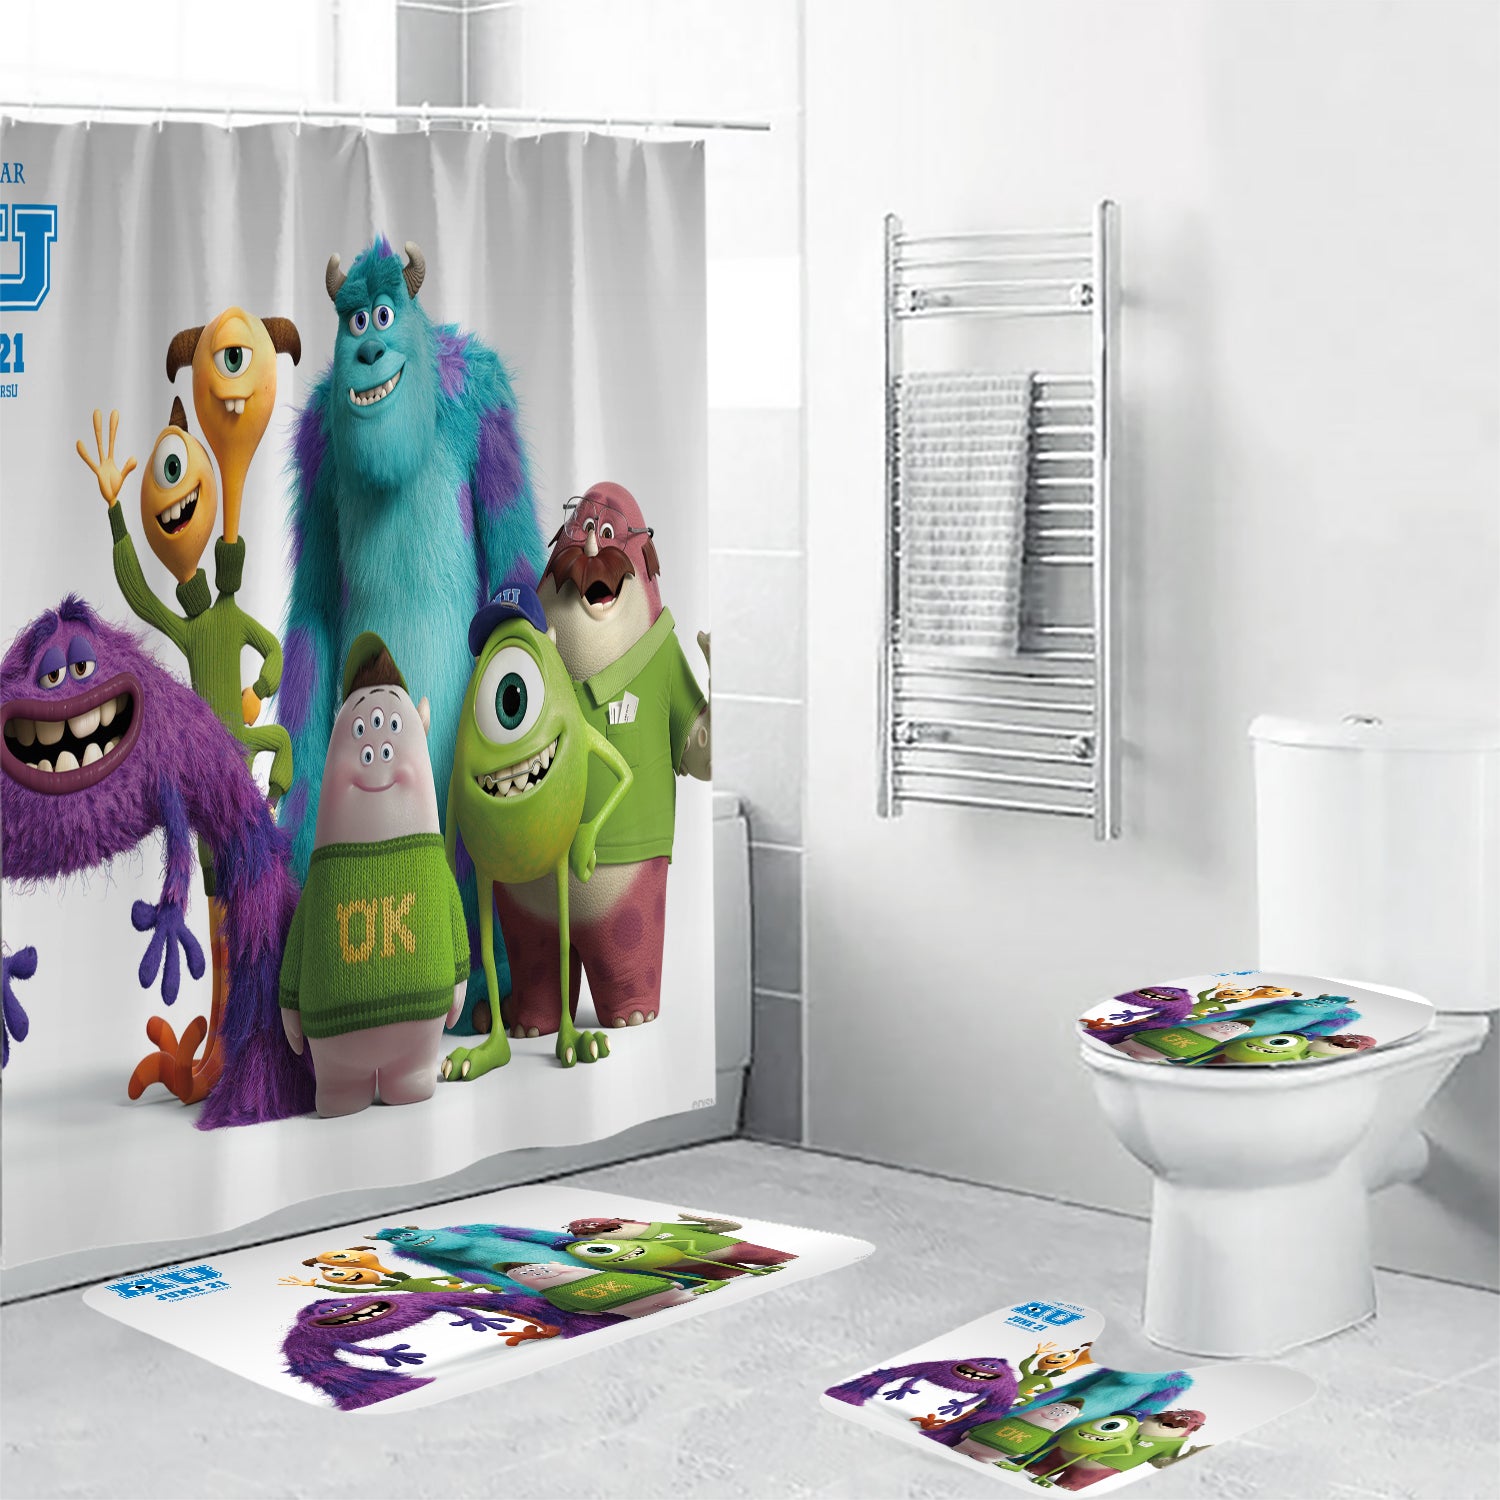 Characters v2 Monsters Inc Monsters University Movie Disney Pixar Waterproof Shower Curtain Non-Slip Toilet Lid Cover Bath Mat - Bathroom Set